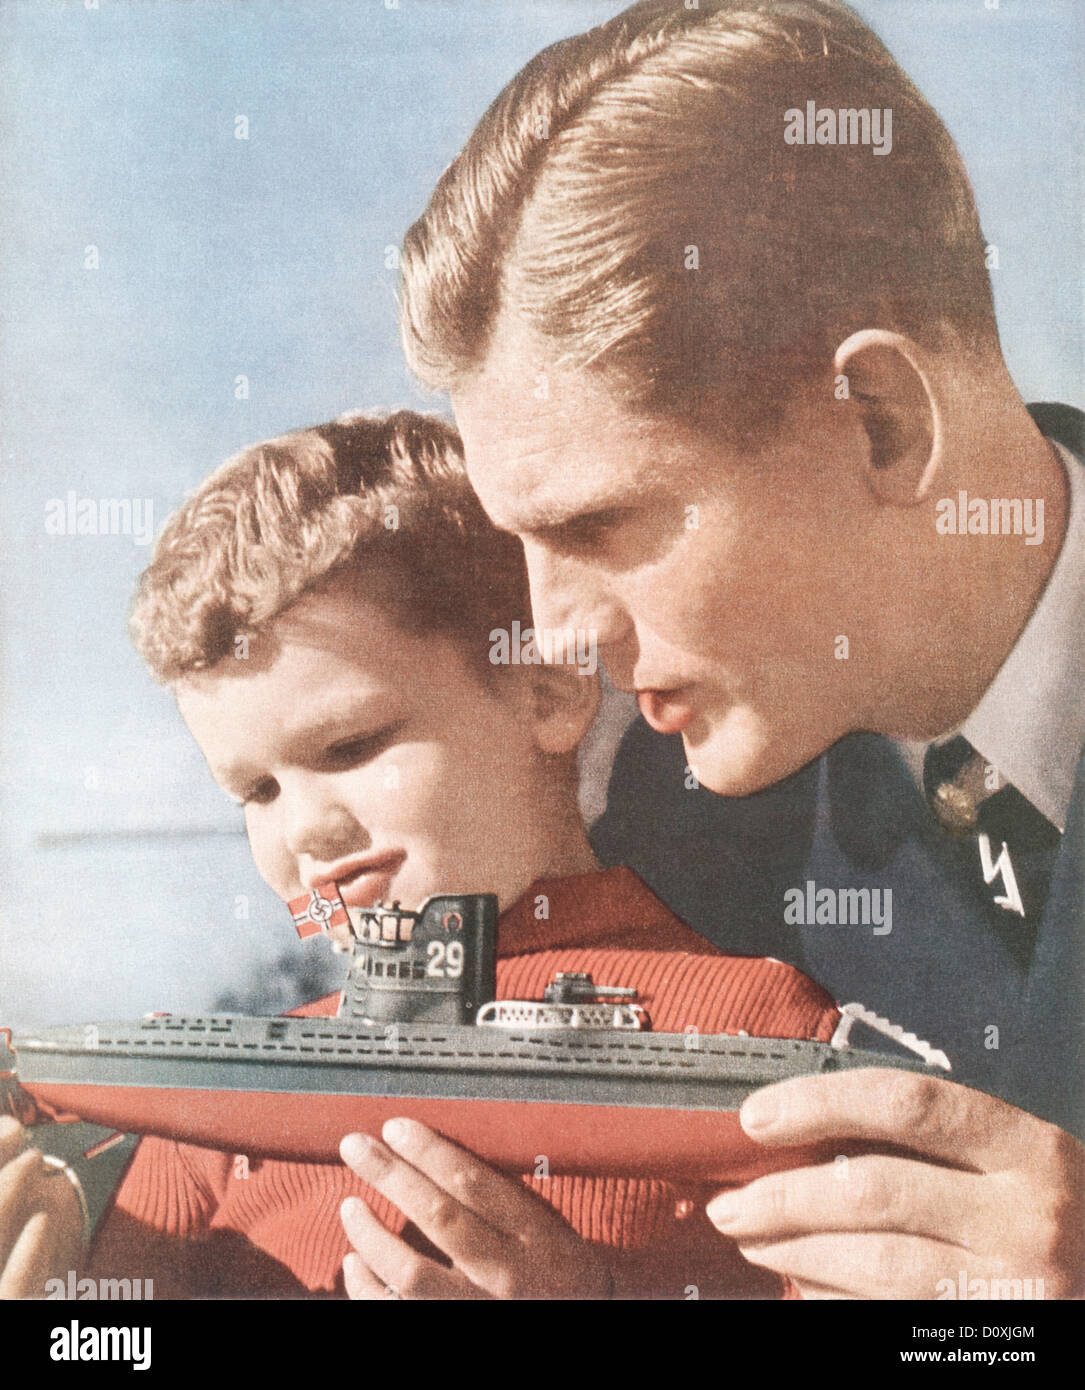 Boat, Swastika, German, father, son, toy, vessel, Nazi, flag, World War II, Germany, 1940, Stock Photo